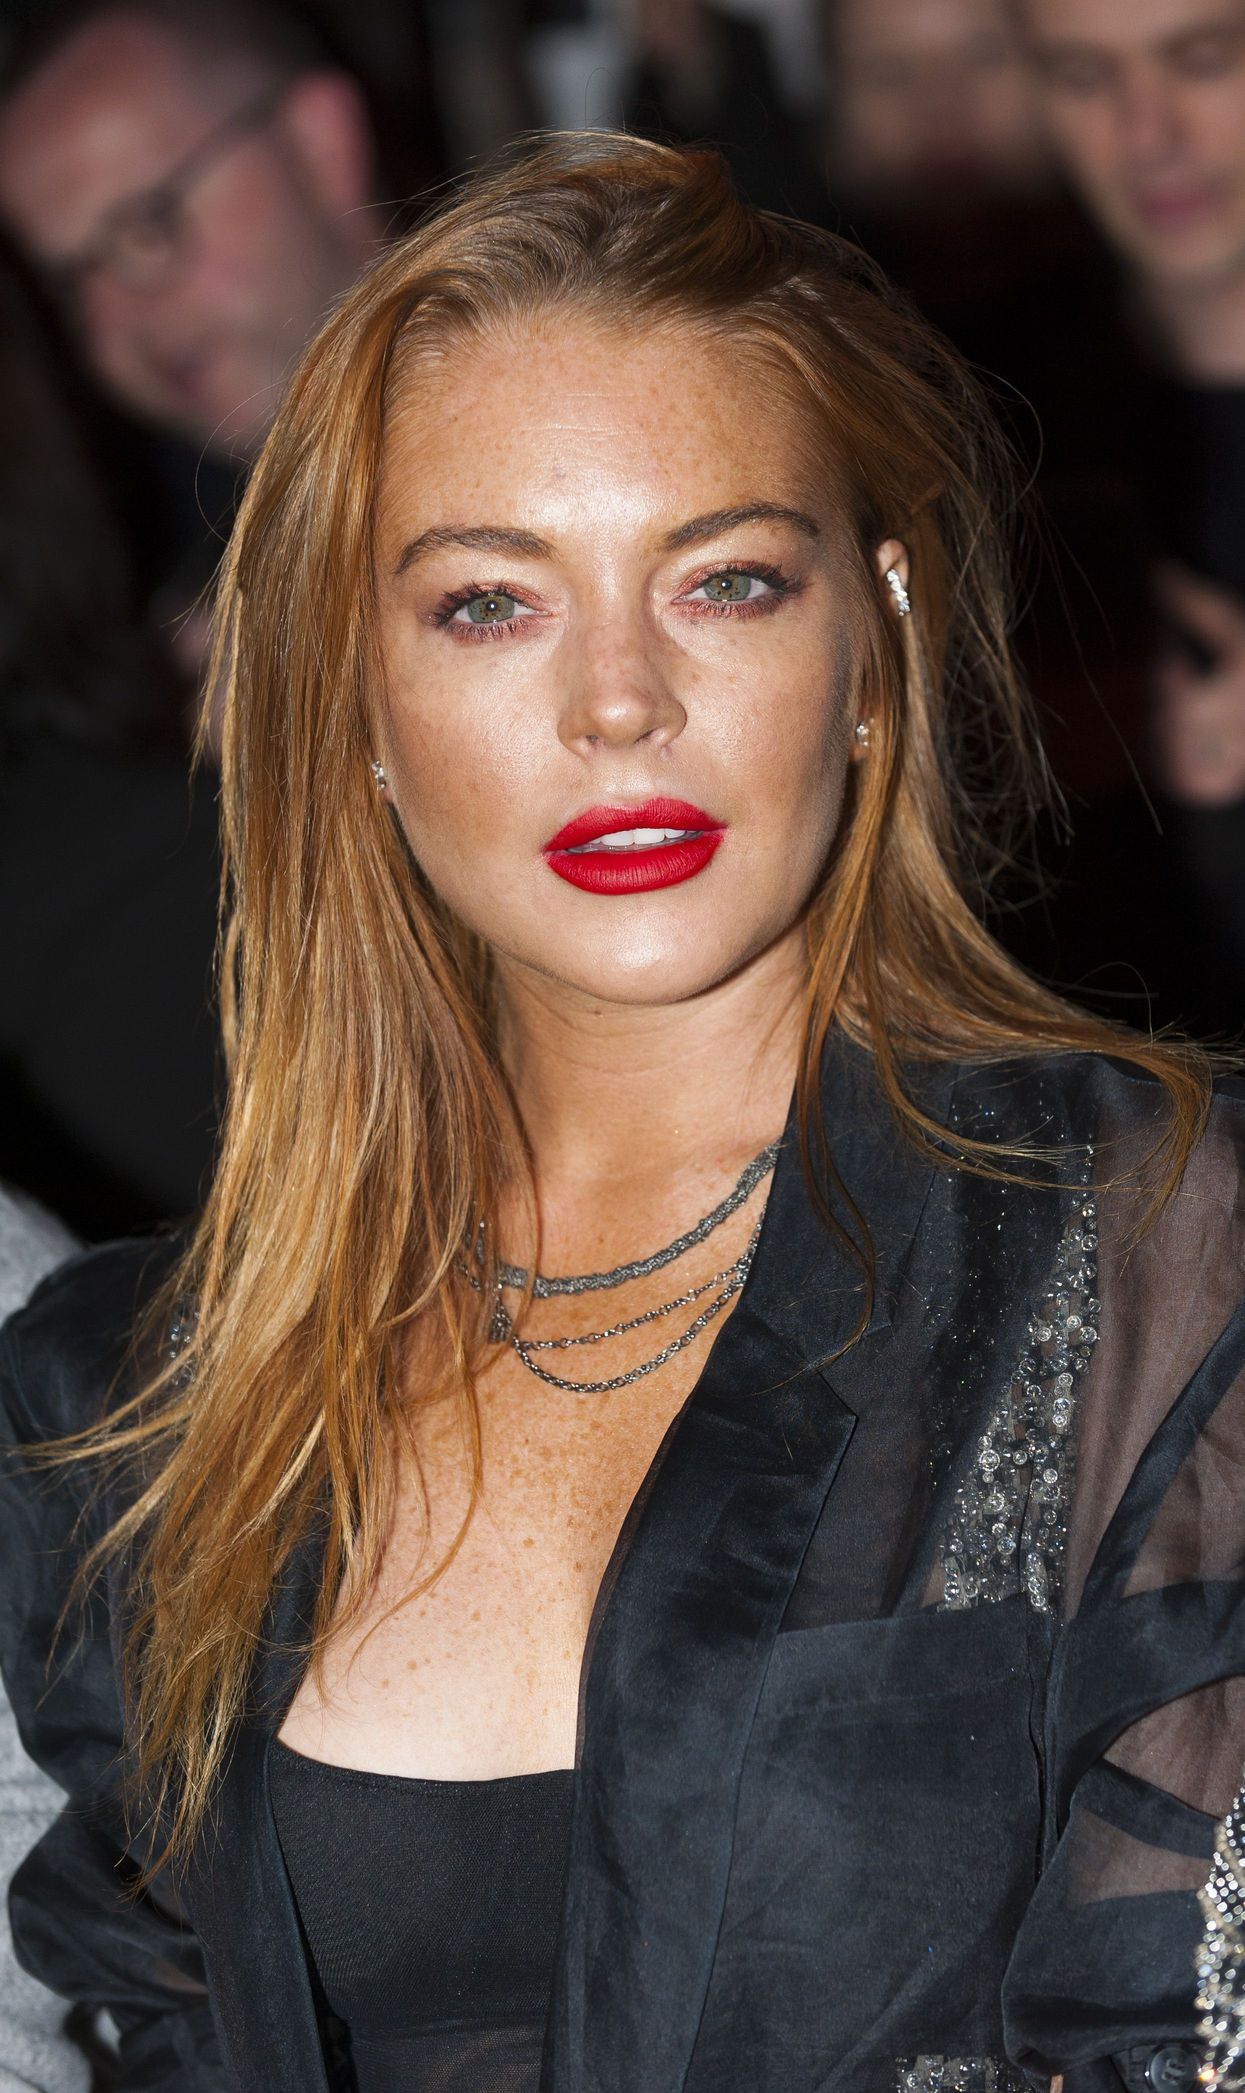 Lindsay Lohan Nipple Slip 20 ภาพถ่าย ดารานู้ด 2510